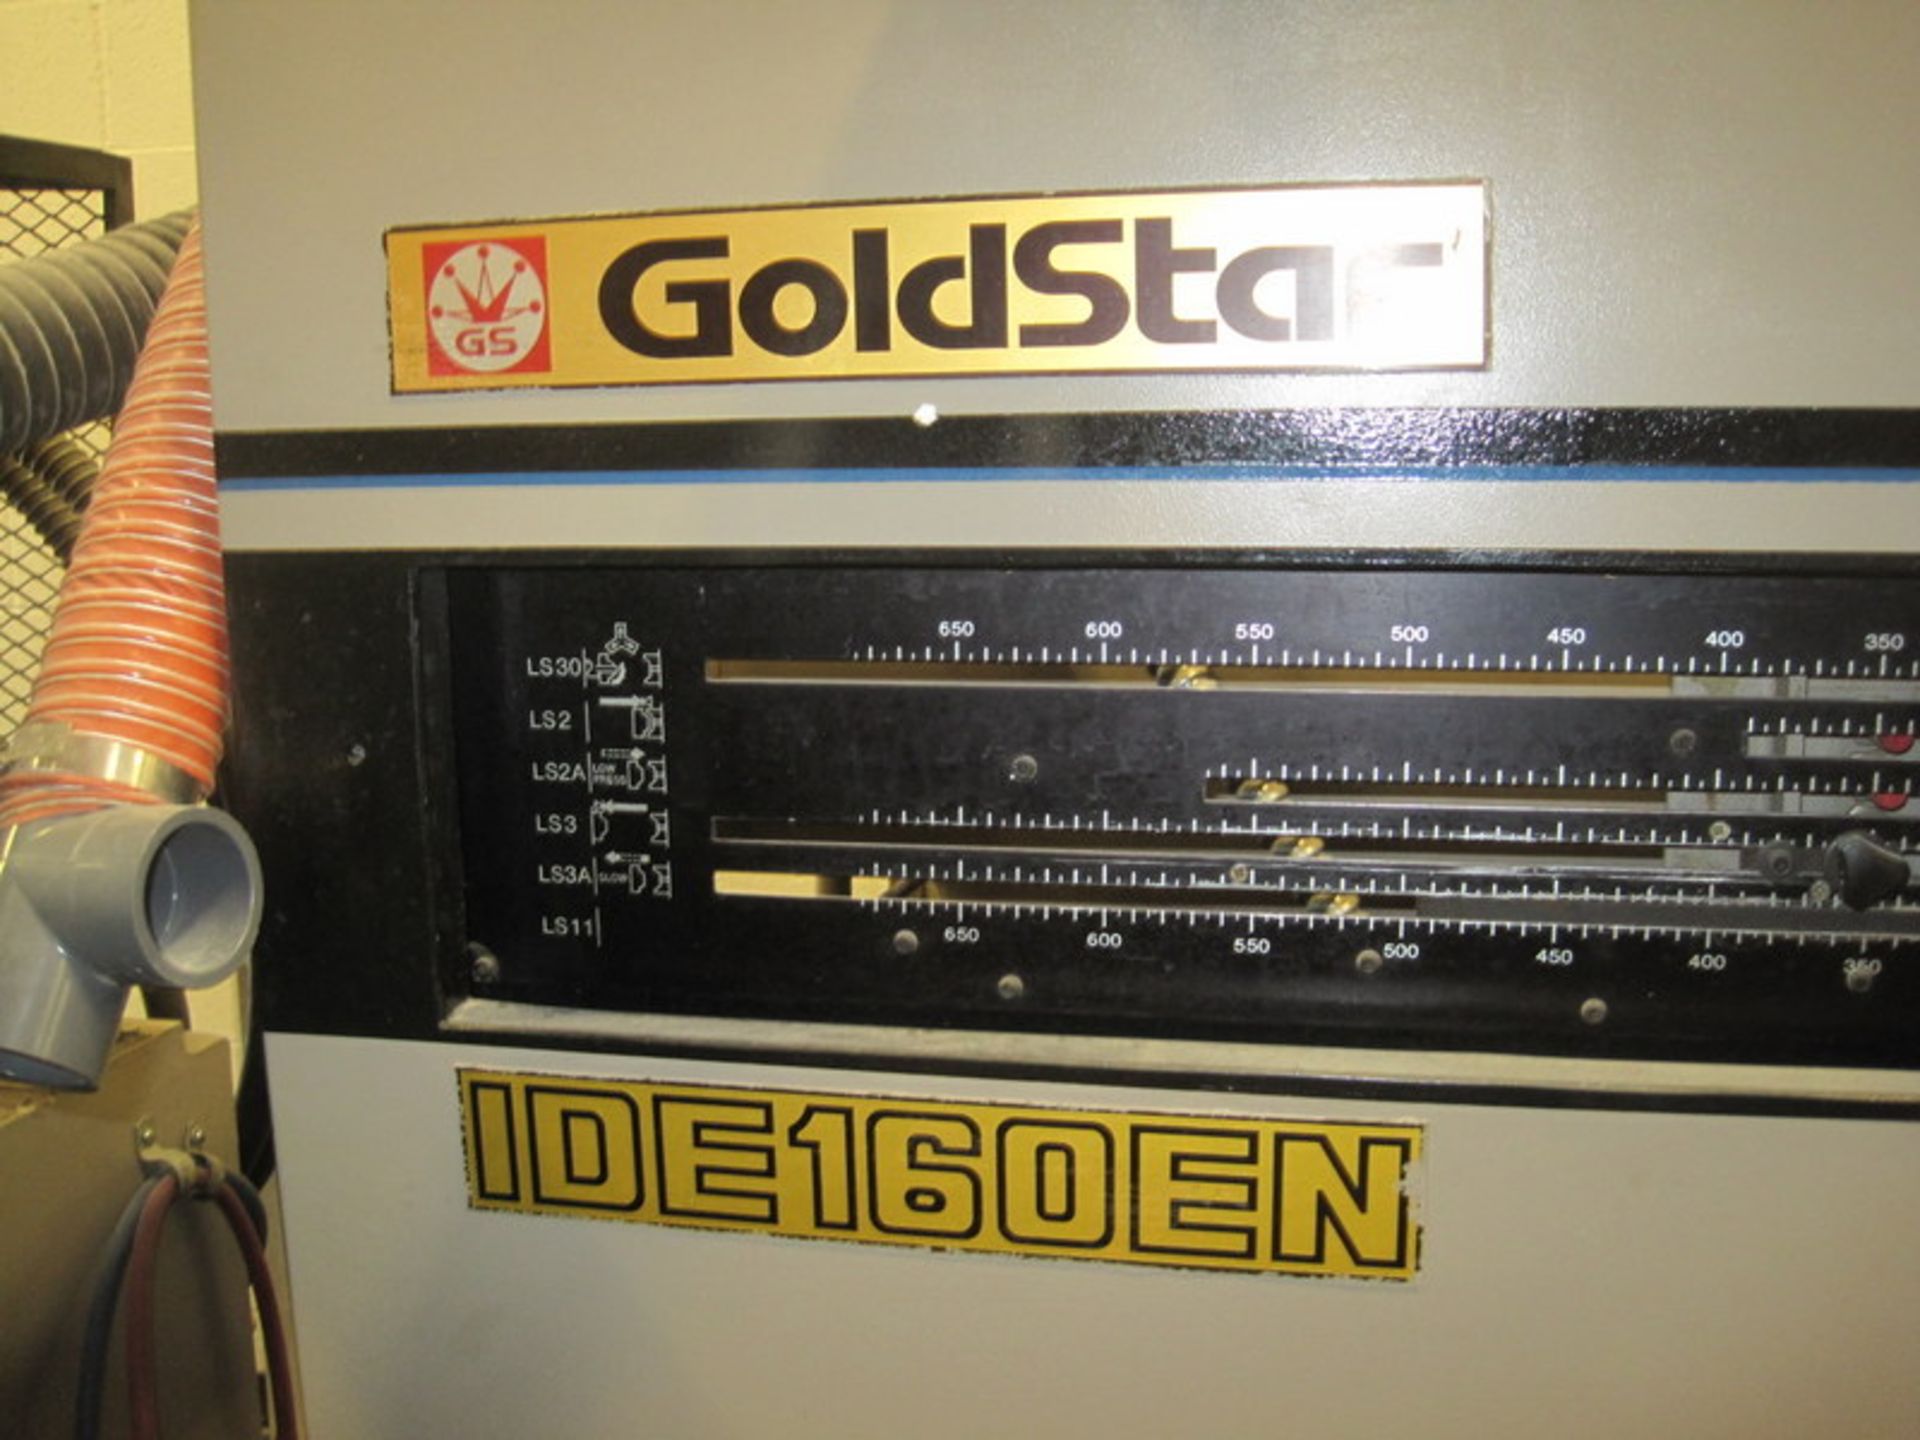 Goldstar IDE 160EN Molding Press w/ Conair, - Image 2 of 5